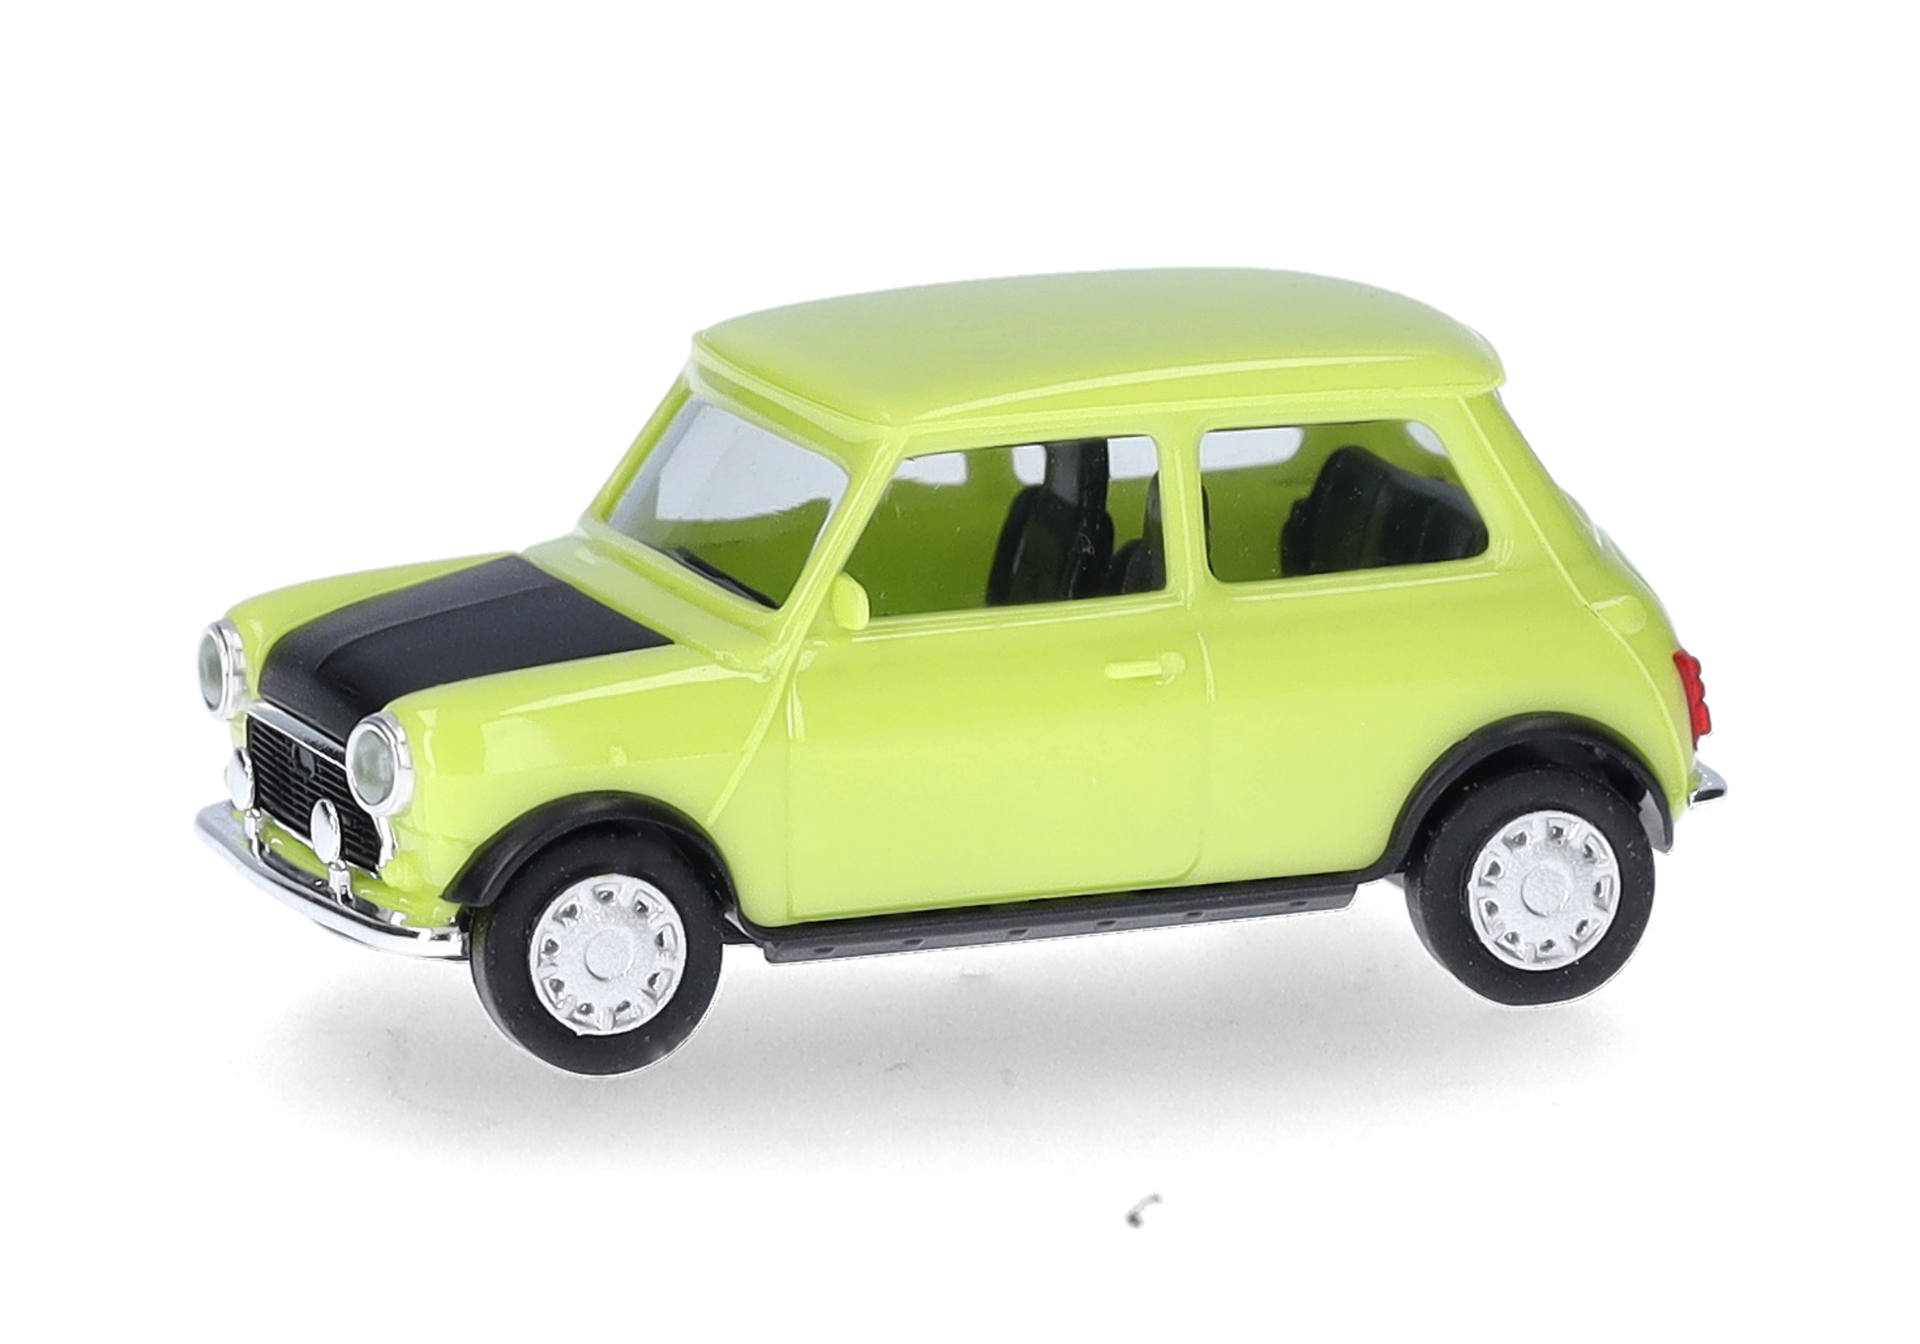 Mini Mayfair, right steering wheel with additional headlights, light green